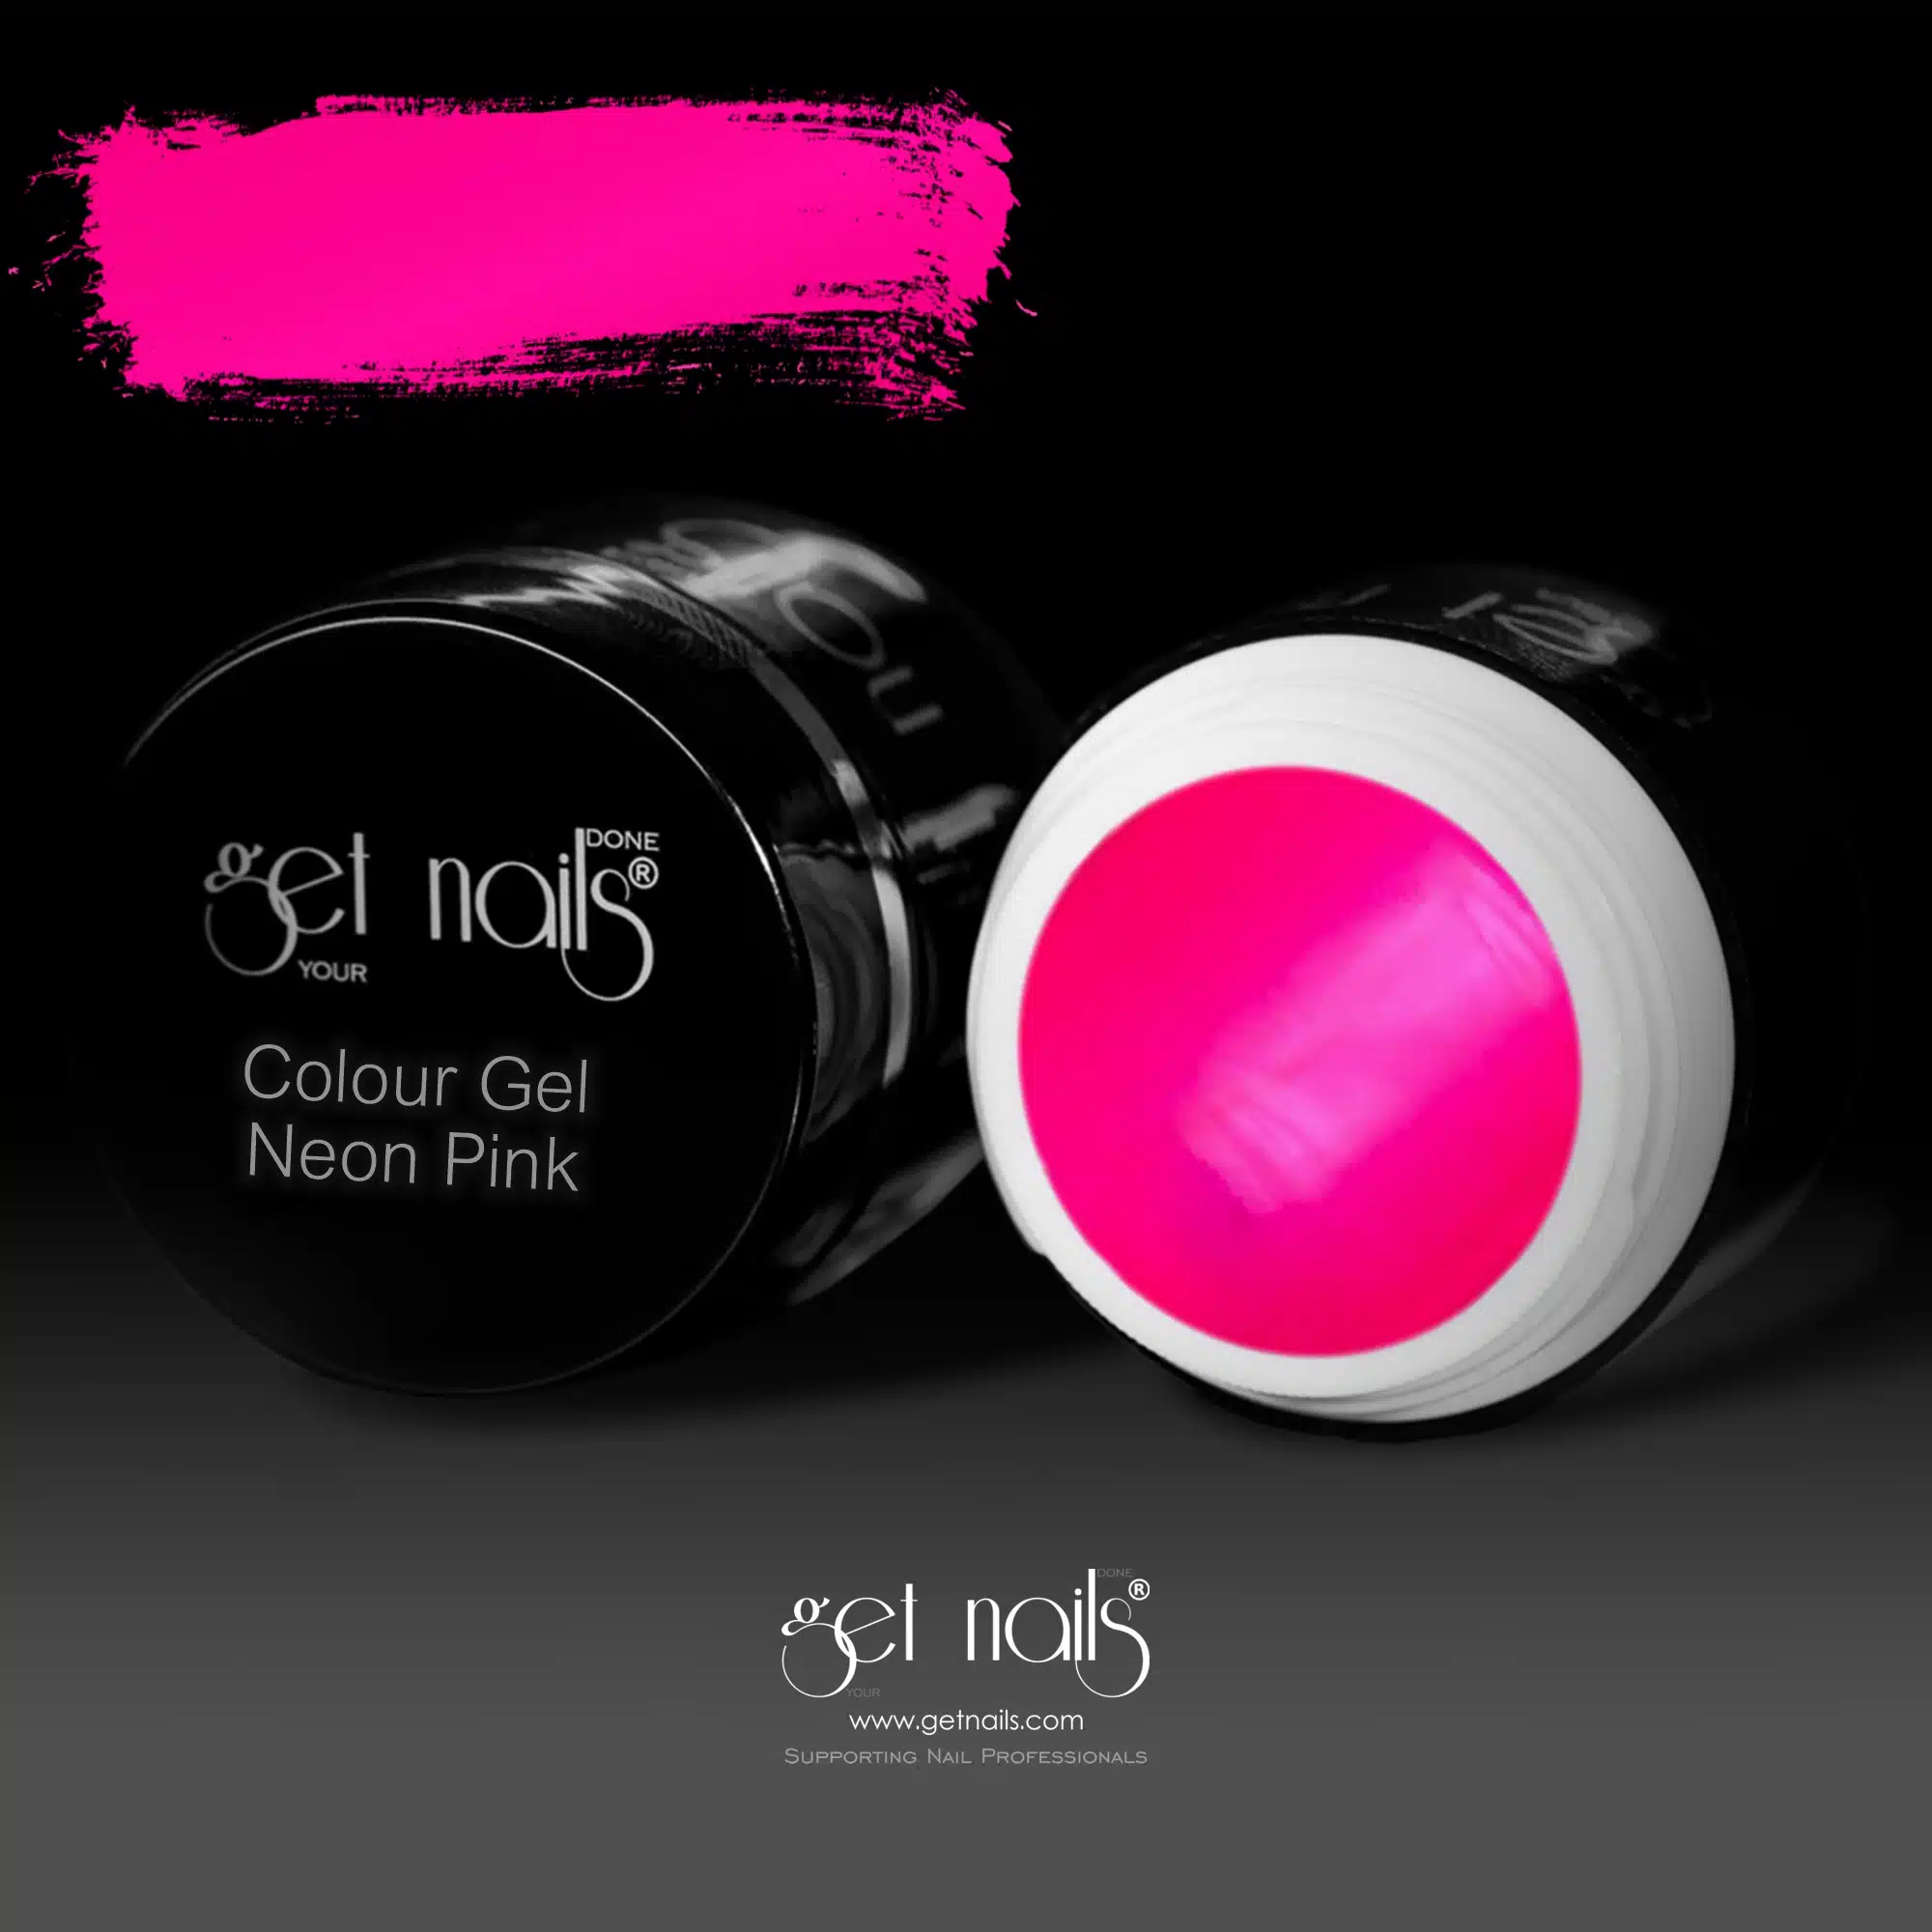 Get Nails Austria - Gel colorato Neon Pink 5g